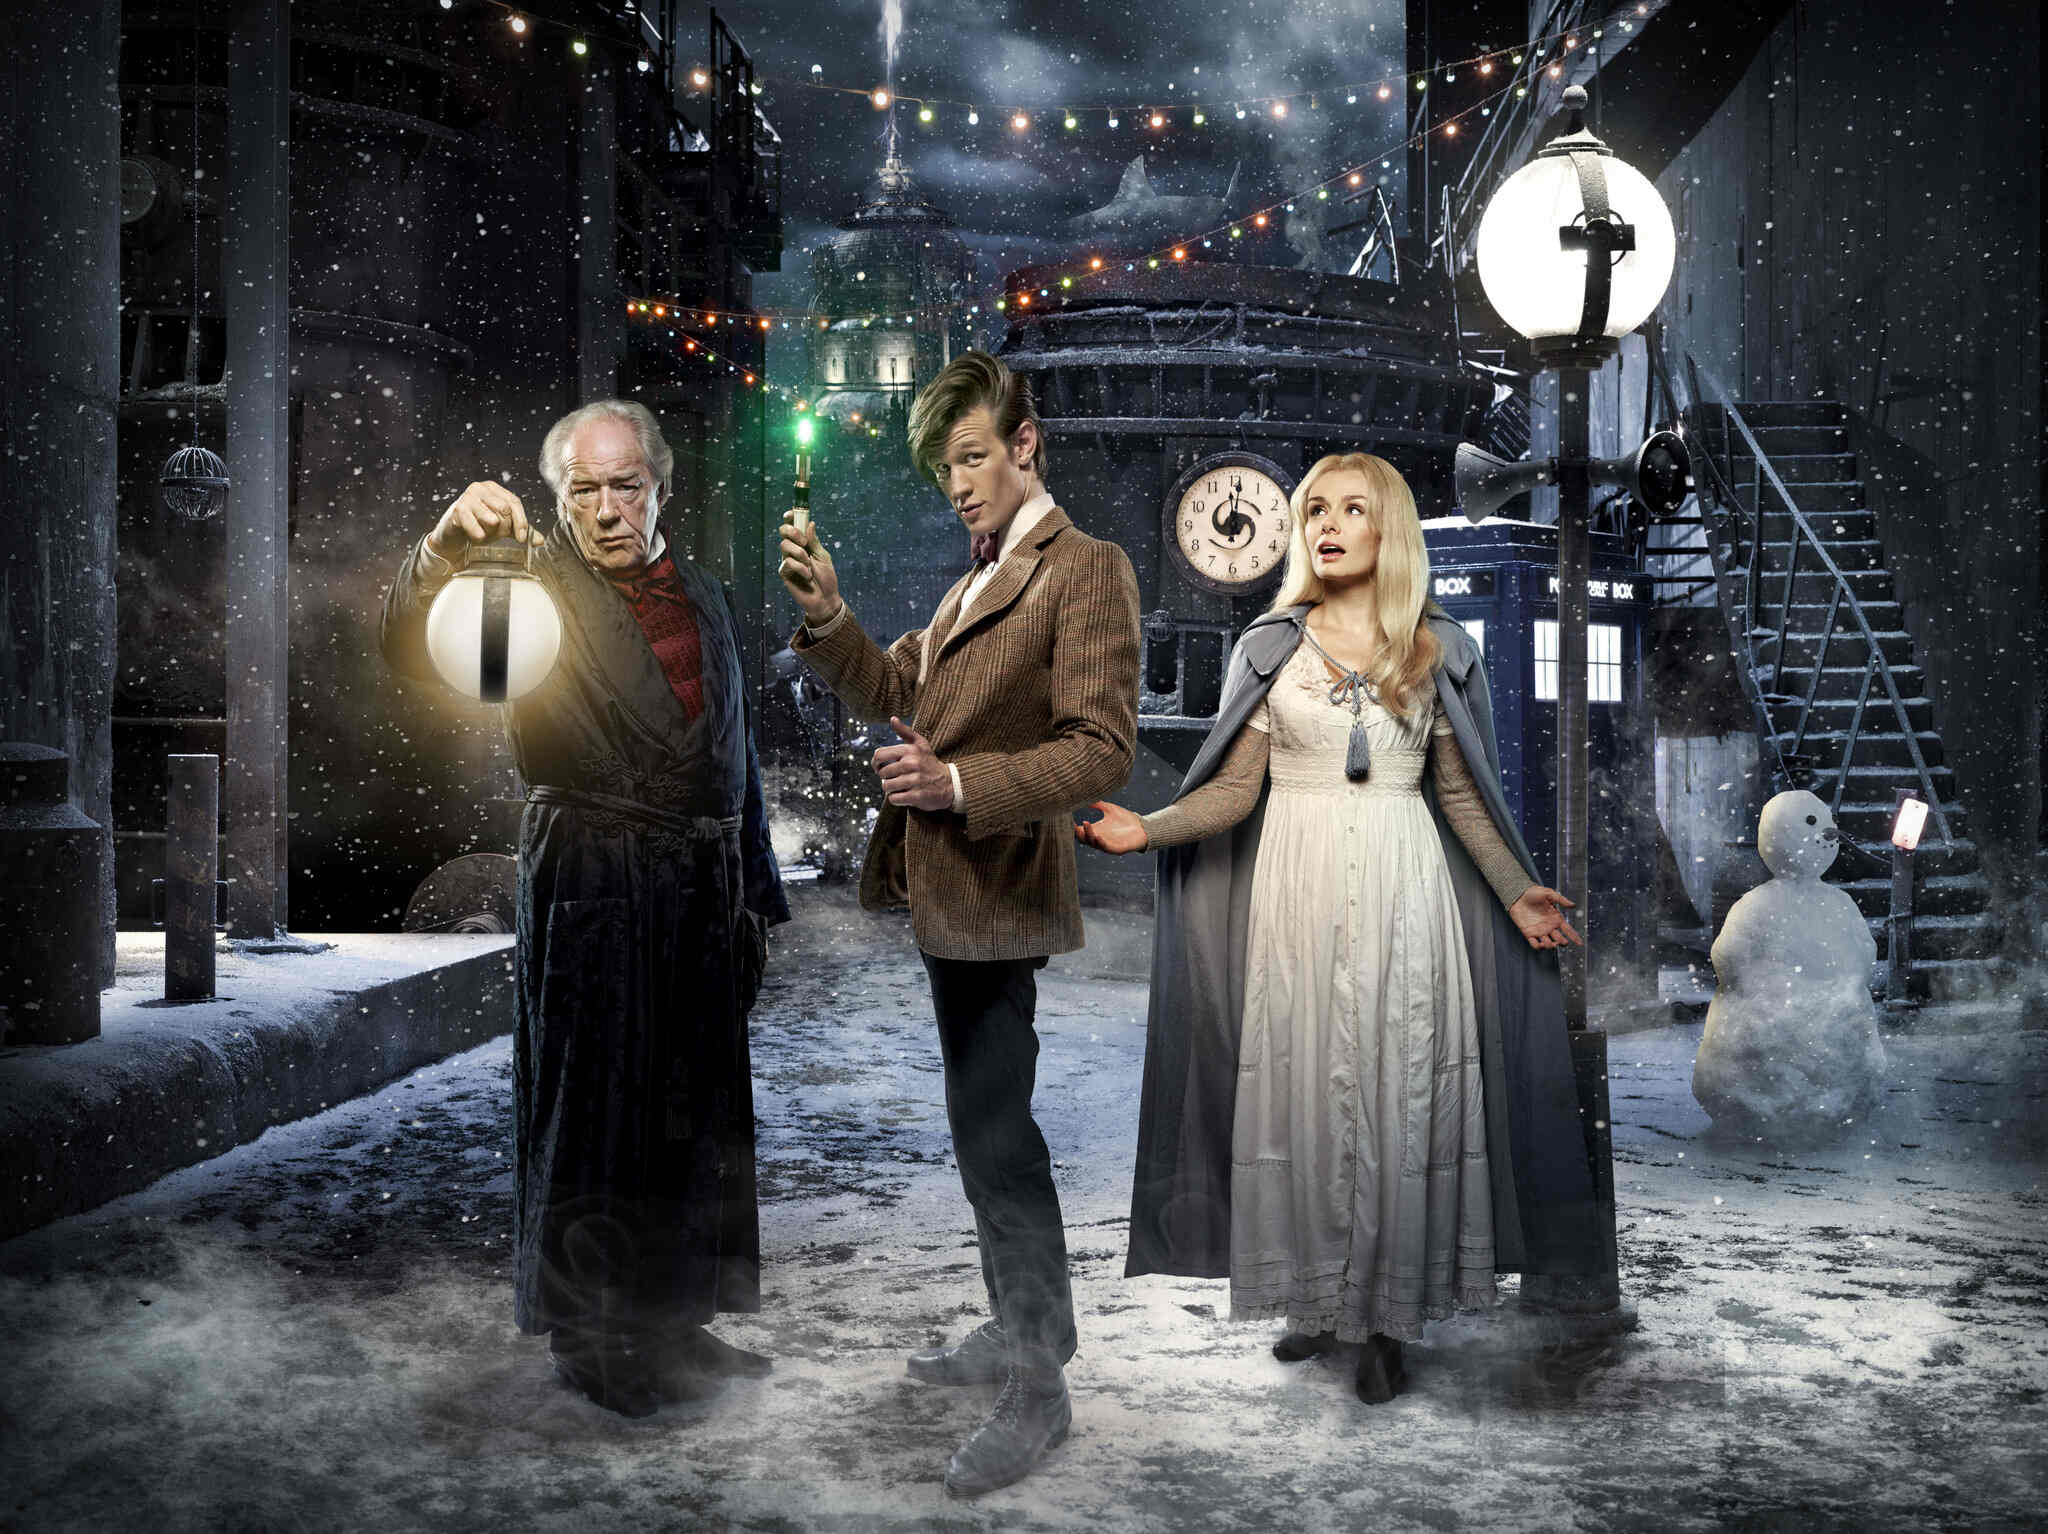 Doctor Who: Tales of the TARDIS (TV Mini Series 2023) - IMDb